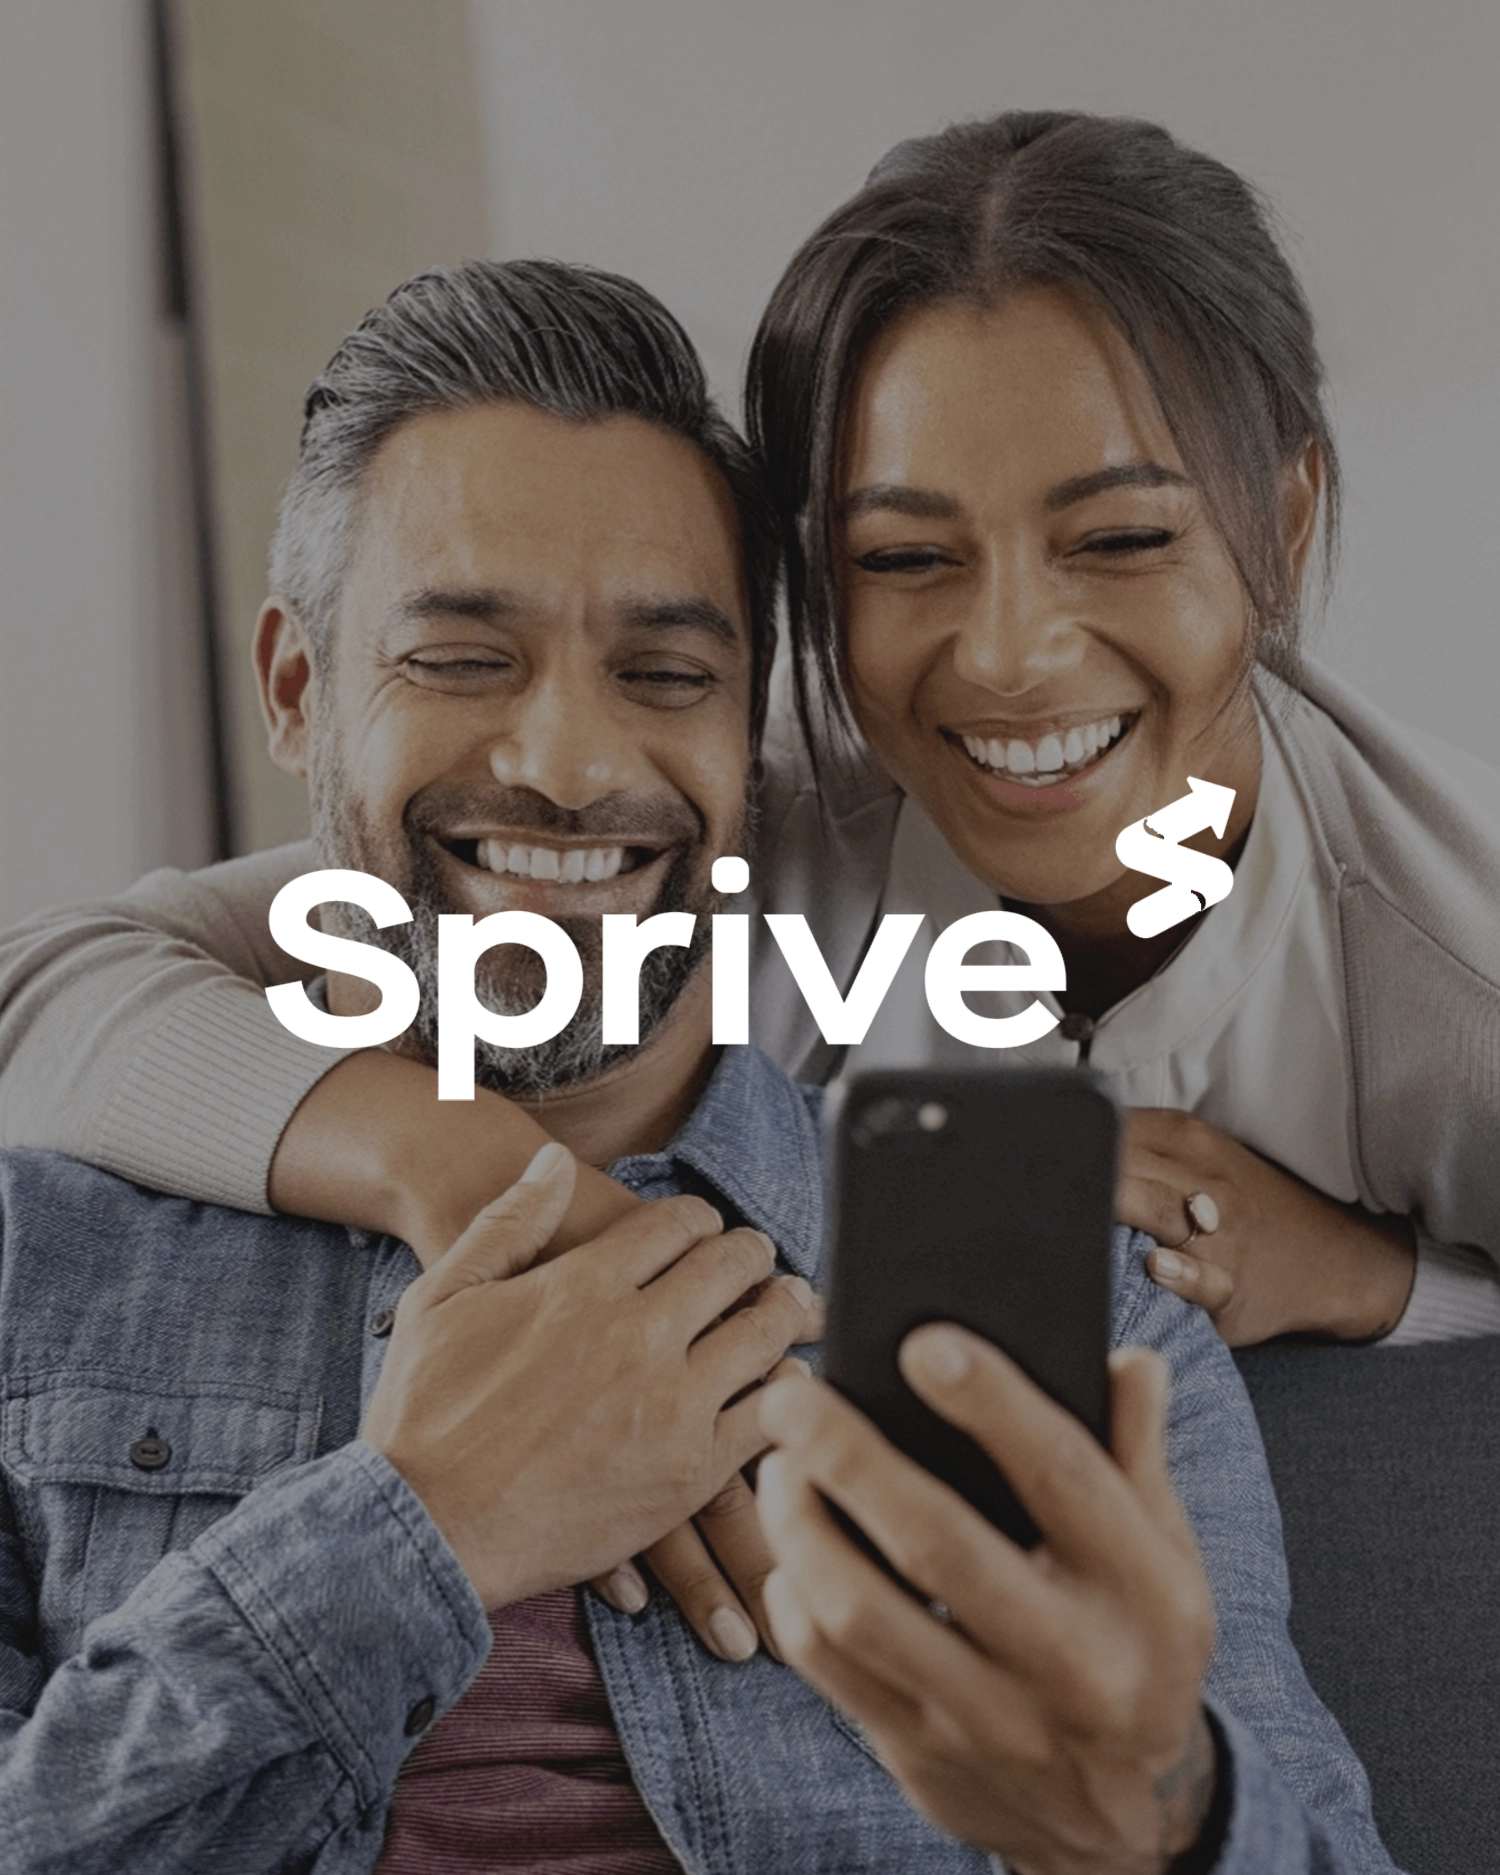 sprive - agency for digital marketing